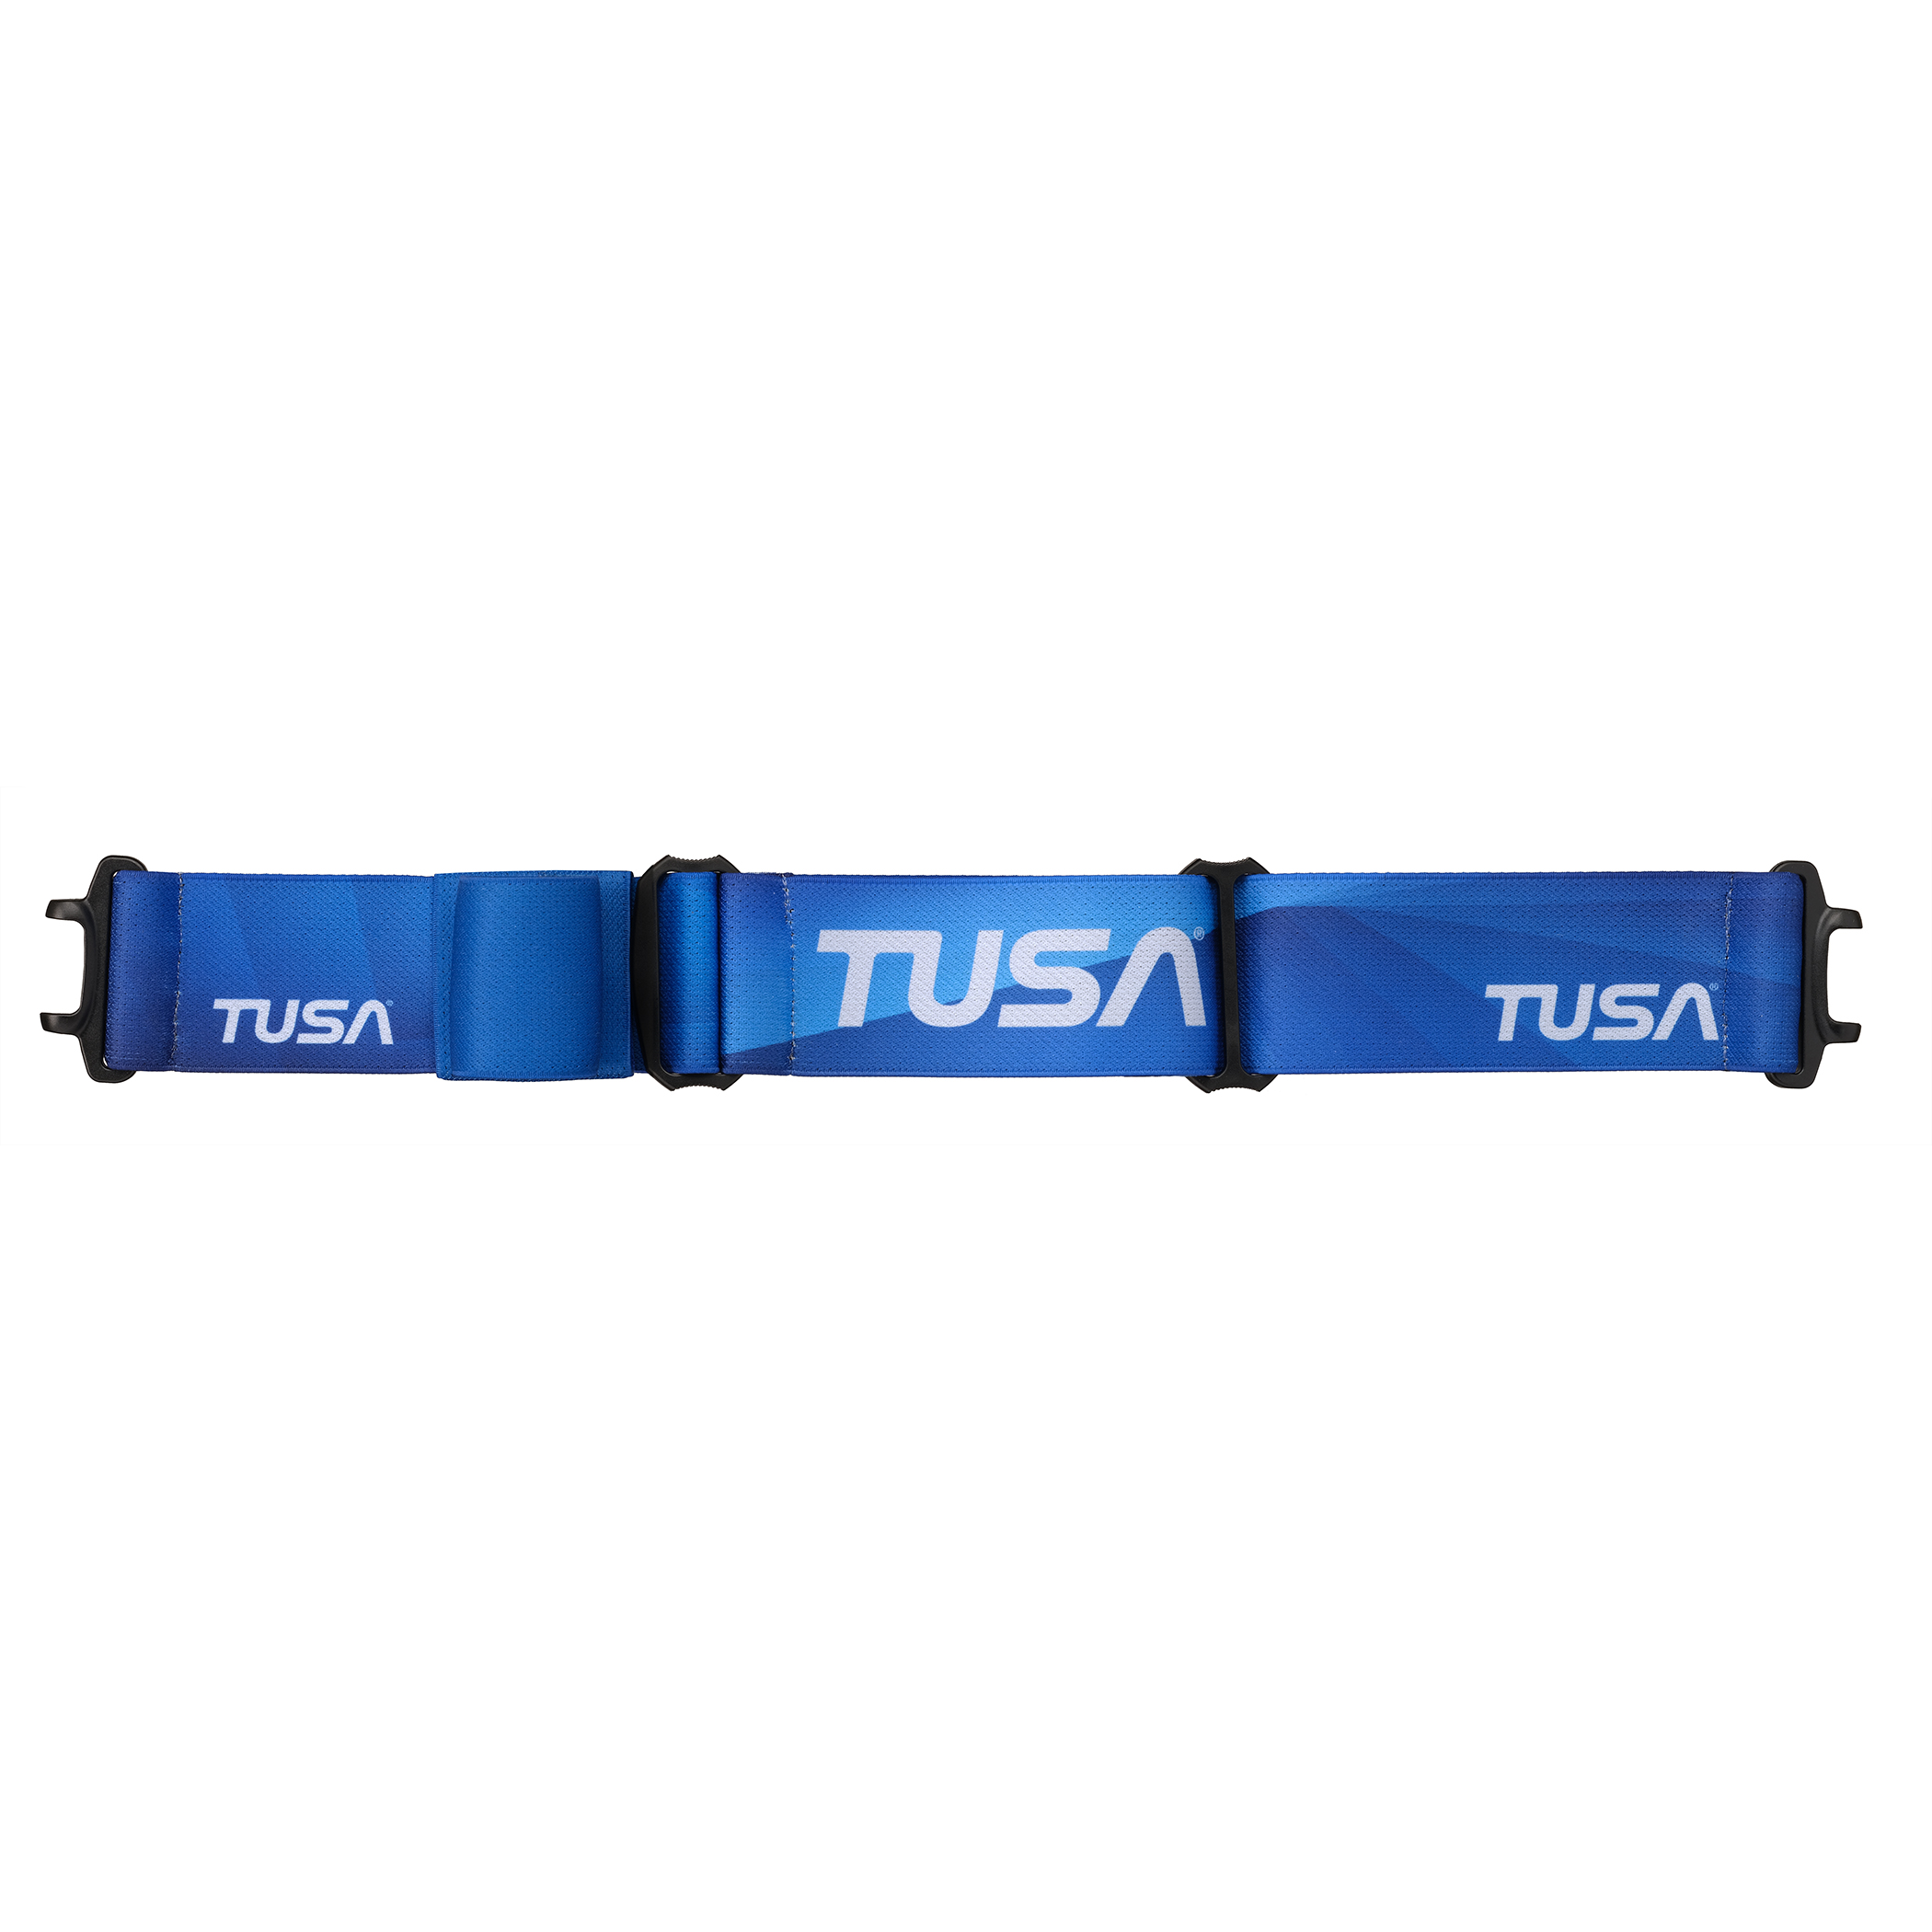 TA0917 Fabric Mask Strap| アクセサリー | TUSA